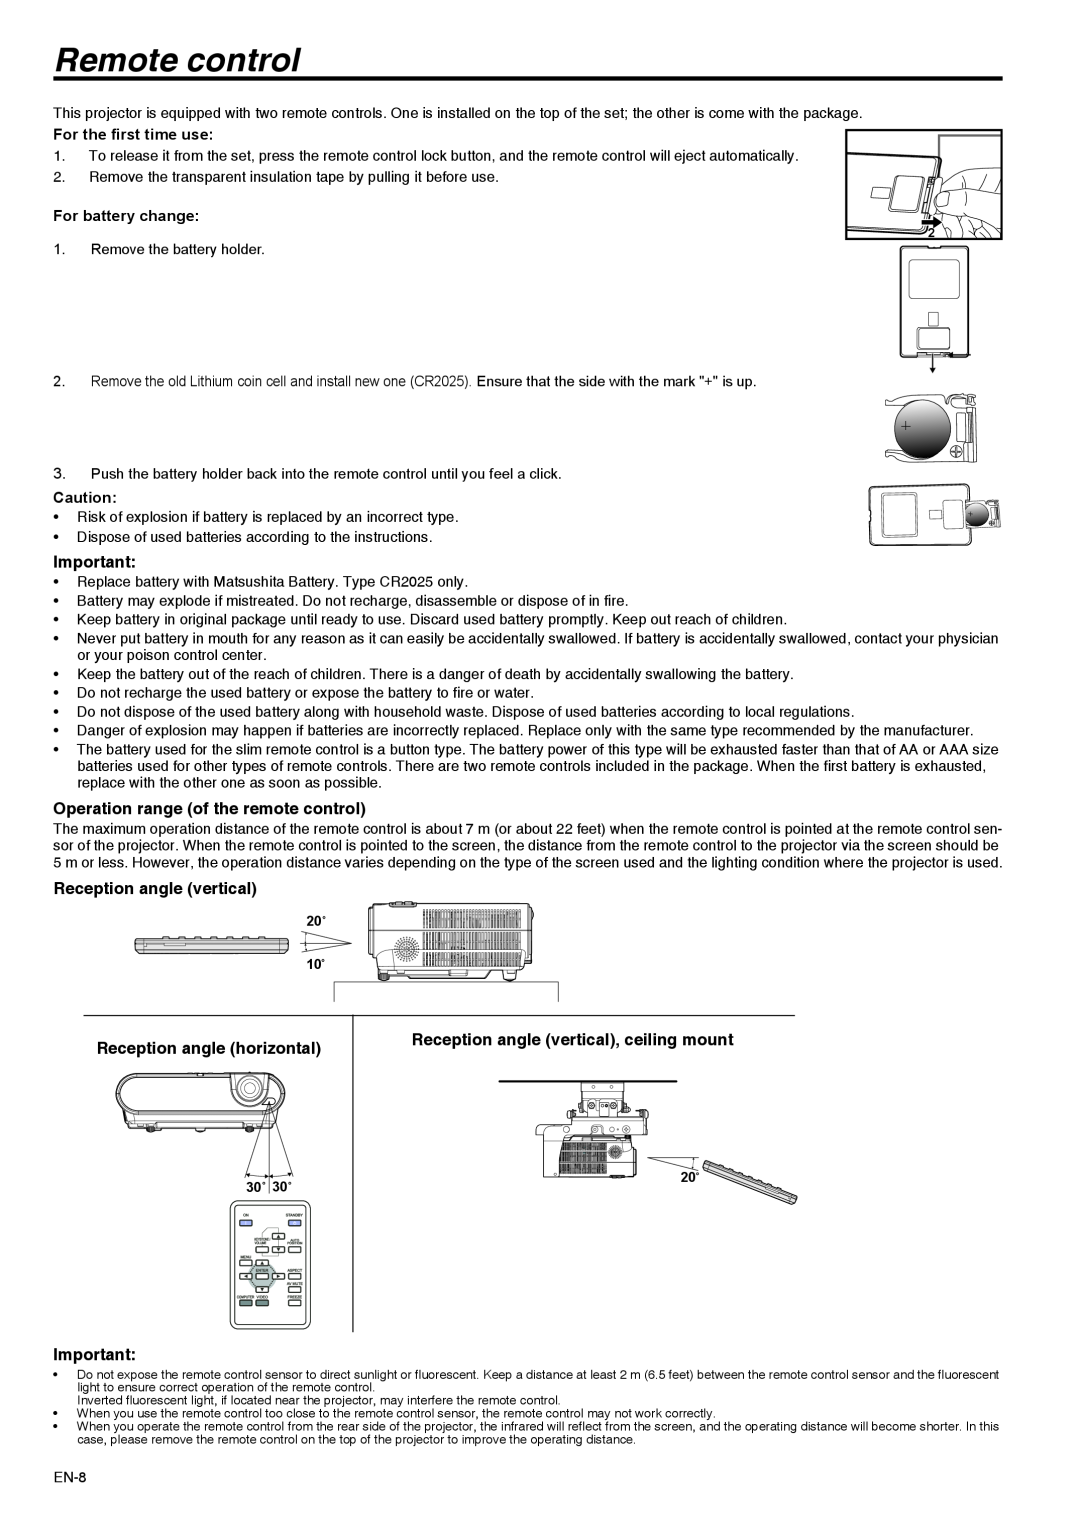 Mitsubishi Electronics XD211U user manual Remote control, Operation range of the remote control, Reception angle vertical 